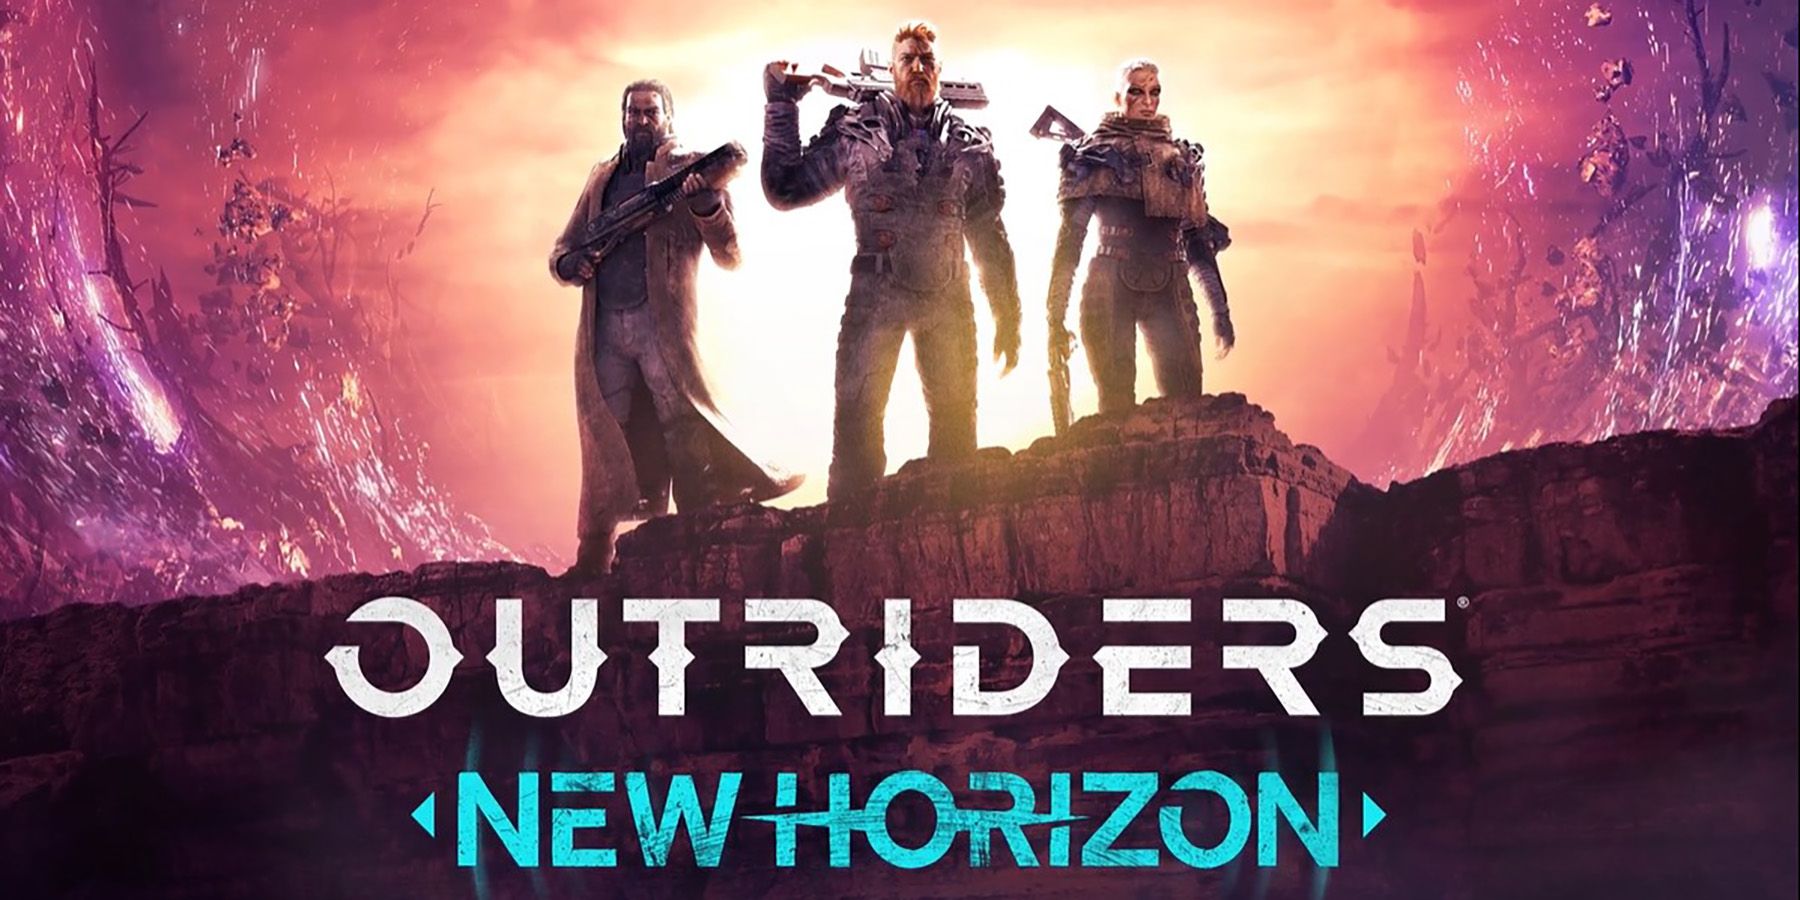 outriders new horizon update